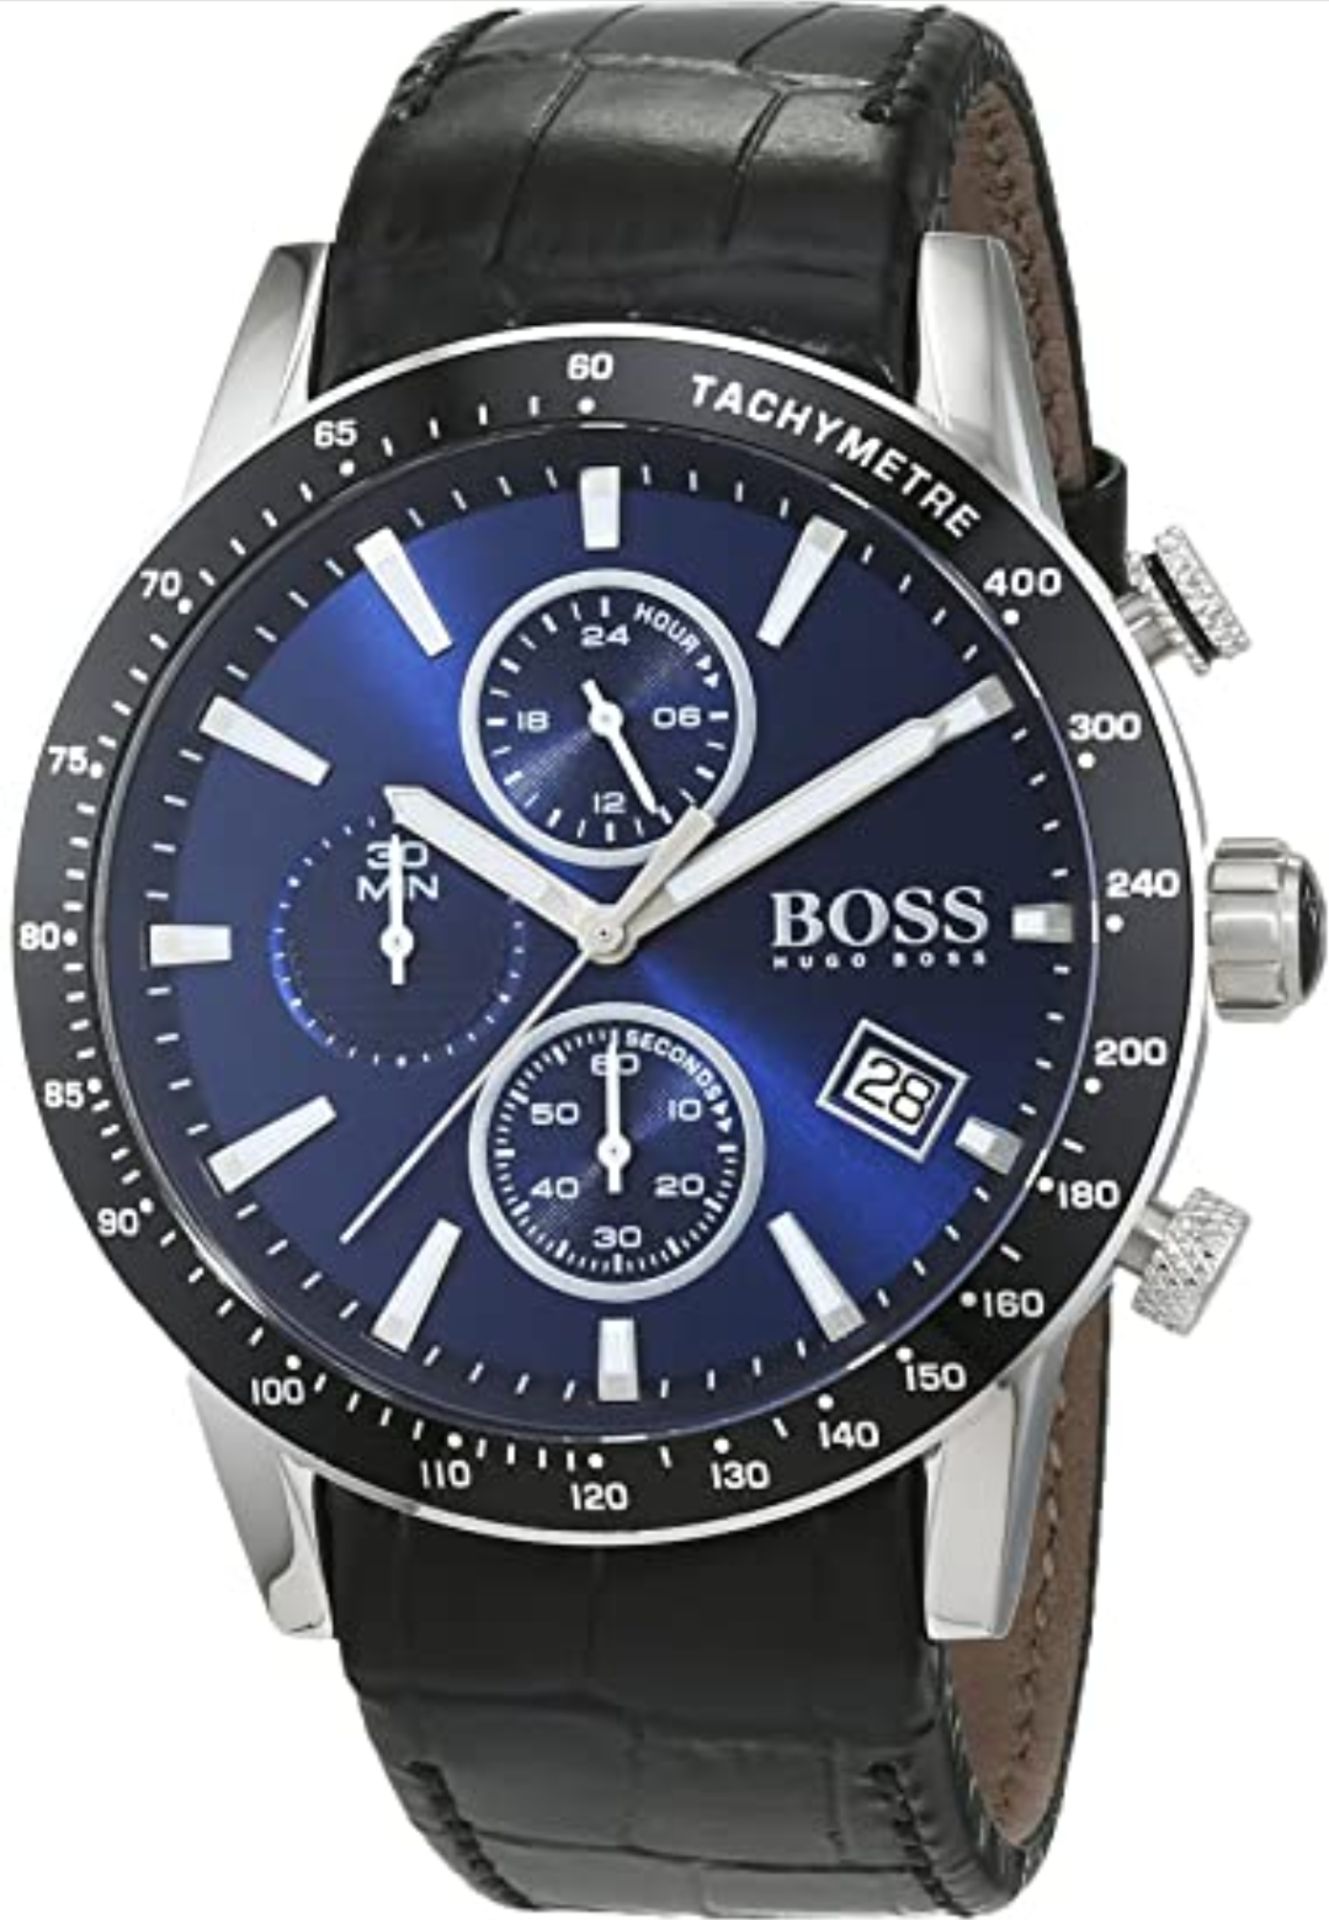 Hugo Boss HB 1513391 Men's Rafale Chronograph Watch - Image 2 of 7